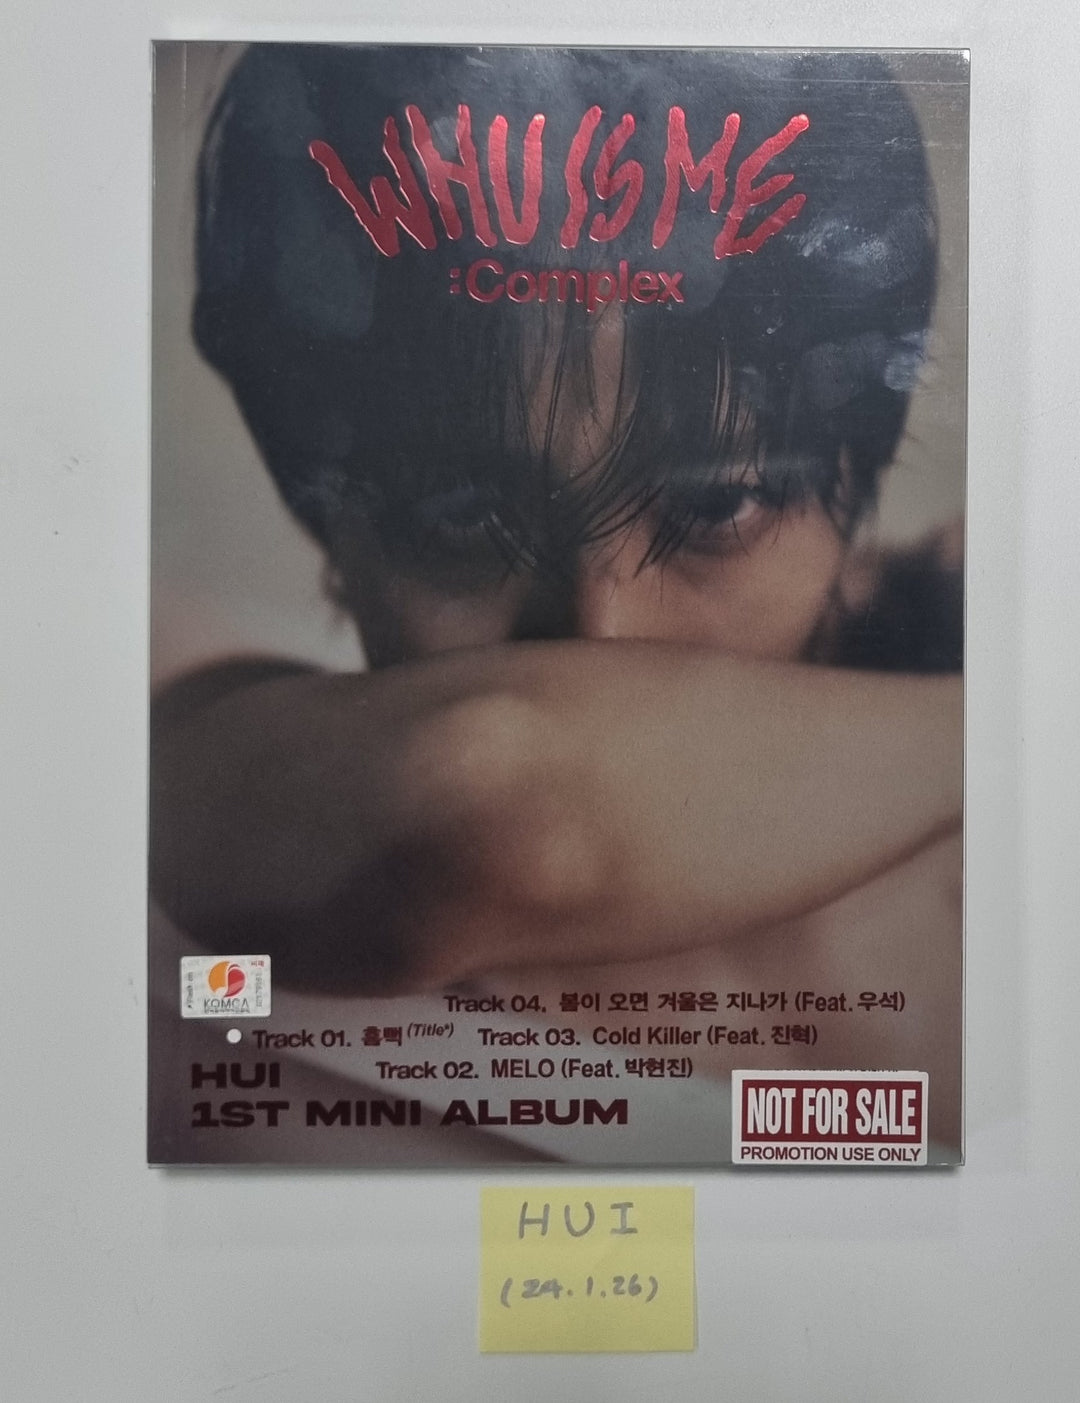 HUI "WHU IS ME : Complex" 1st Mini - Hand Autographed(Signed) Promo Album [24.1.26] (Restocked 1/30)